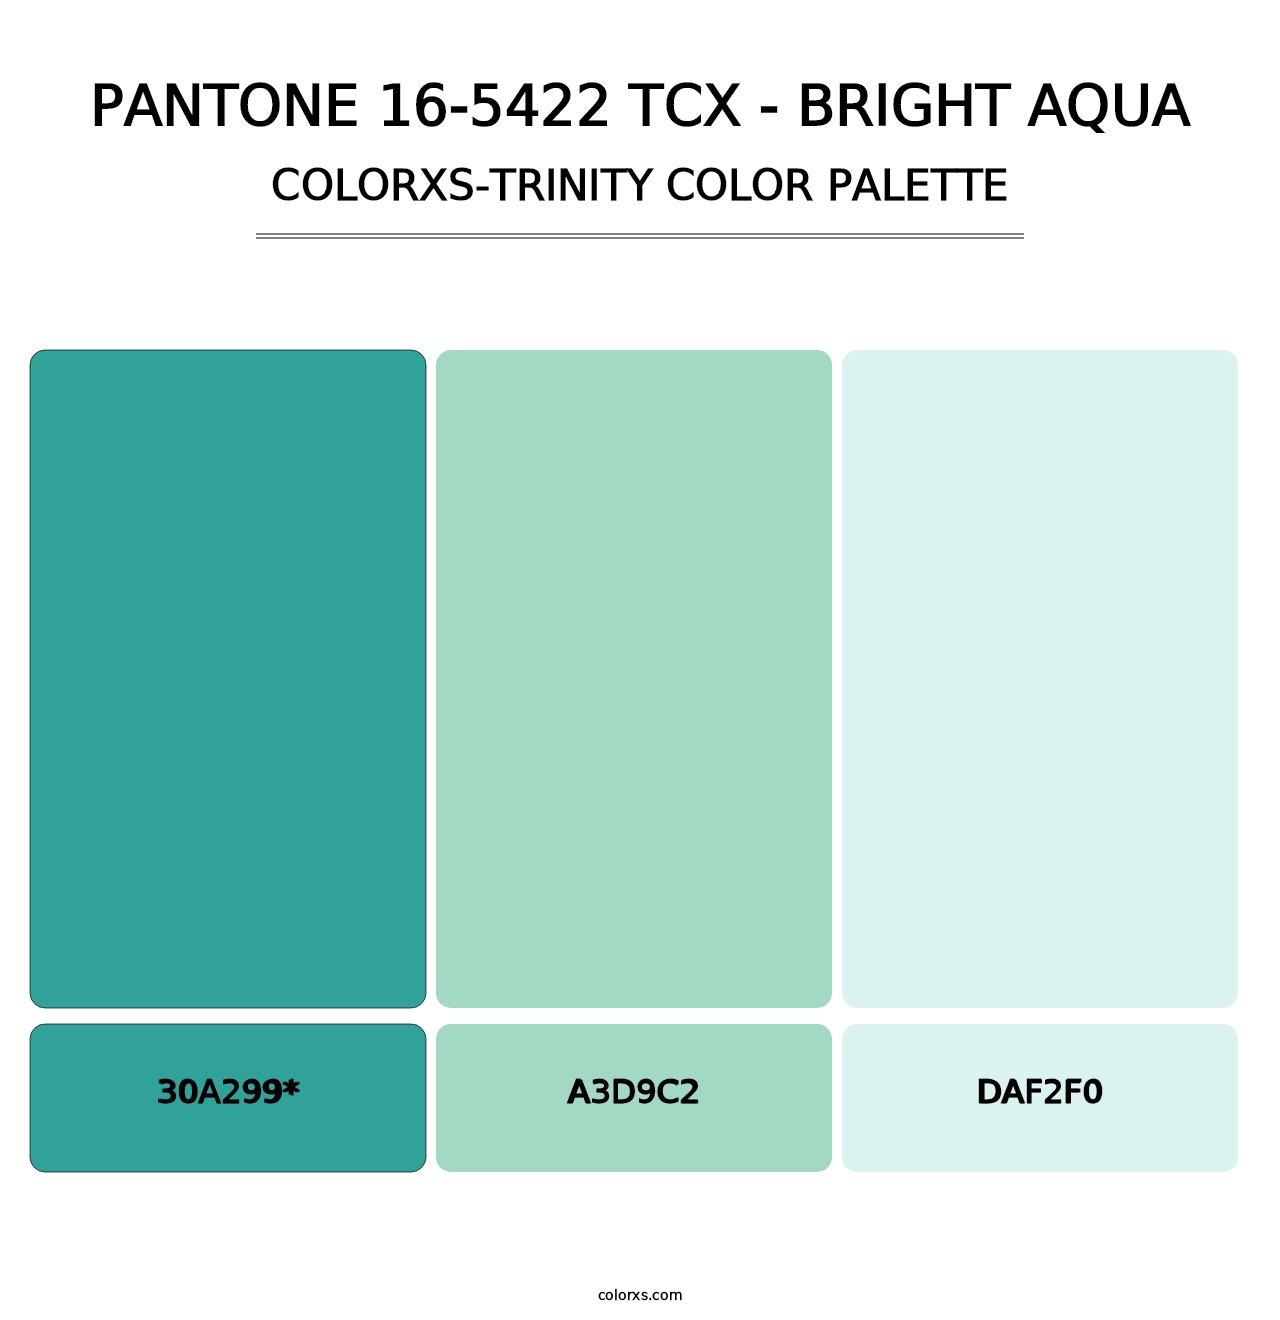 PANTONE 16-5422 TCX - Bright Aqua - Colorxs Trinity Palette